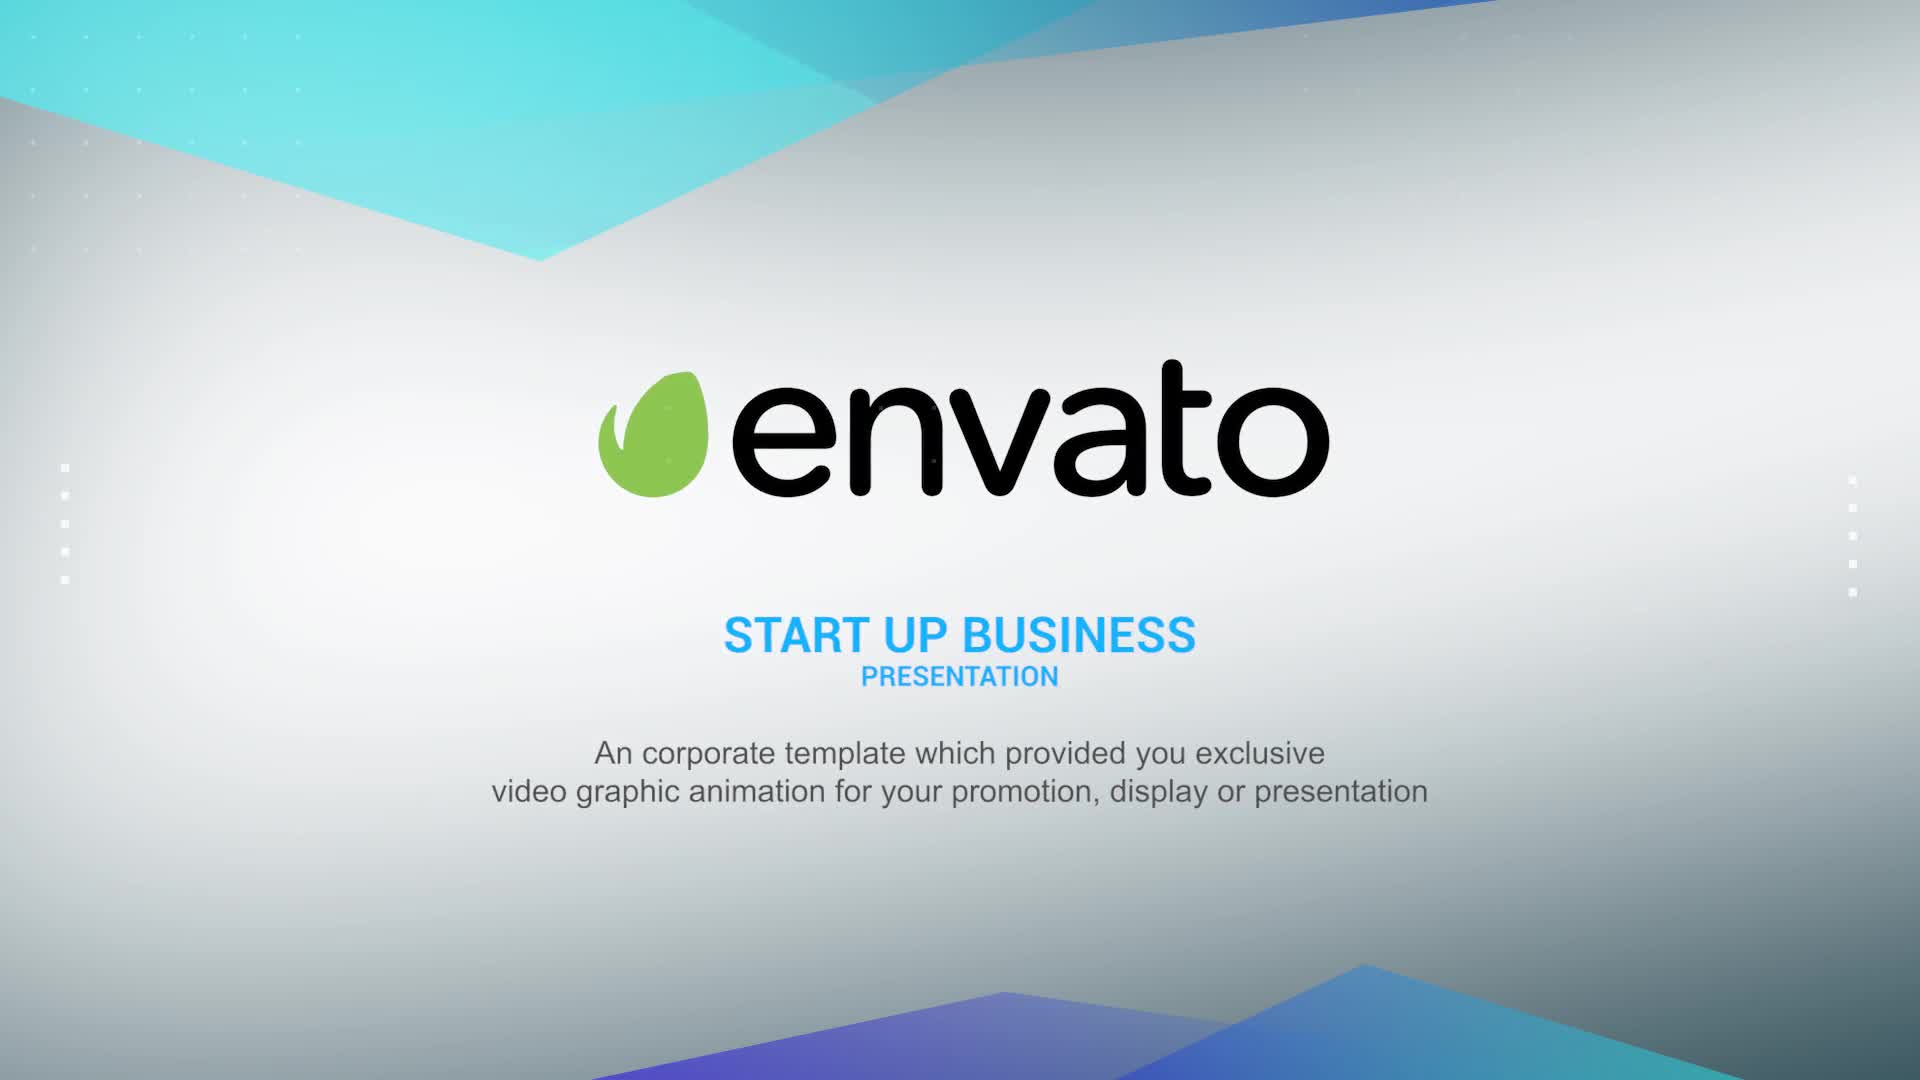 Start Up Business Presentation Premiere Videohive 35921373 Premiere Pro Image 1